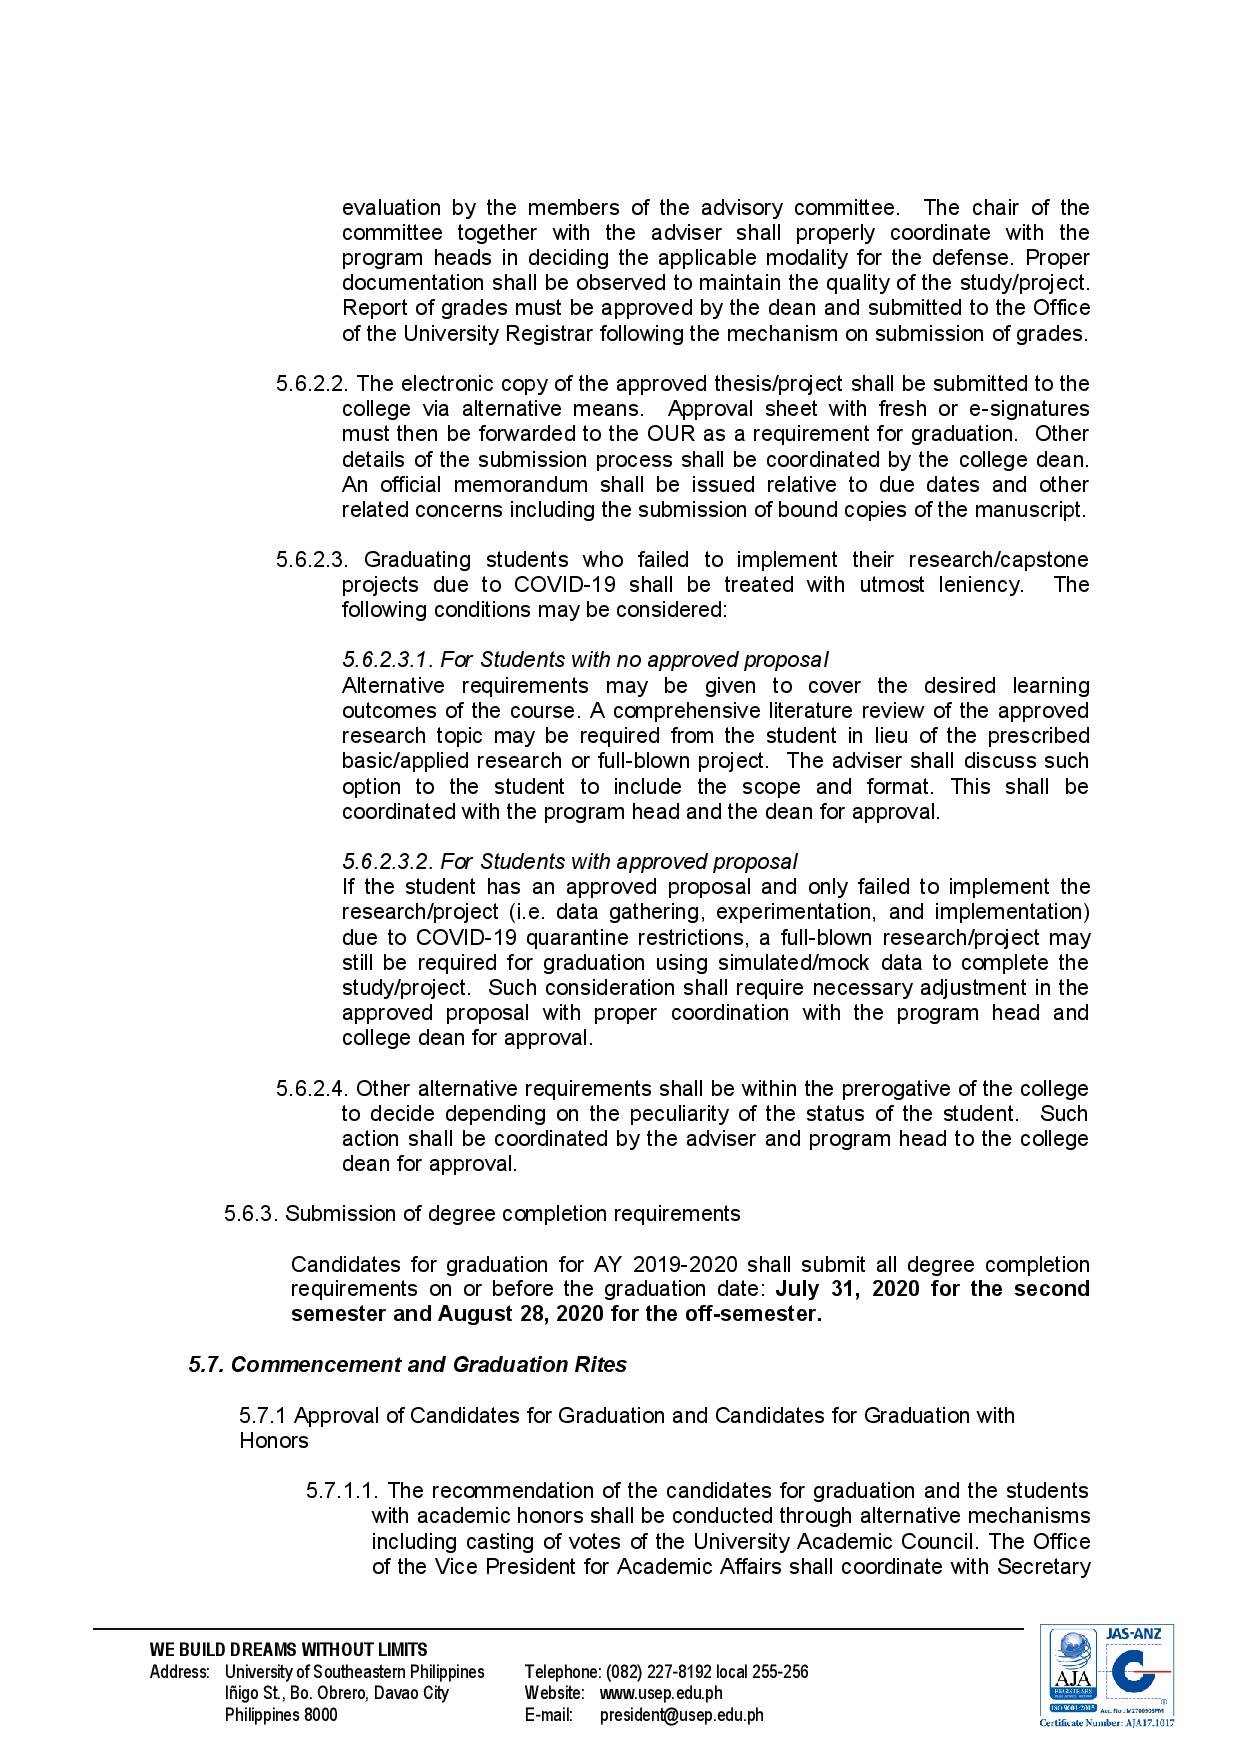 mc-02-s-2020-memorandum-circular-on-usep-academic-regulations-amidst-the-covid-19-pandemic-page-006